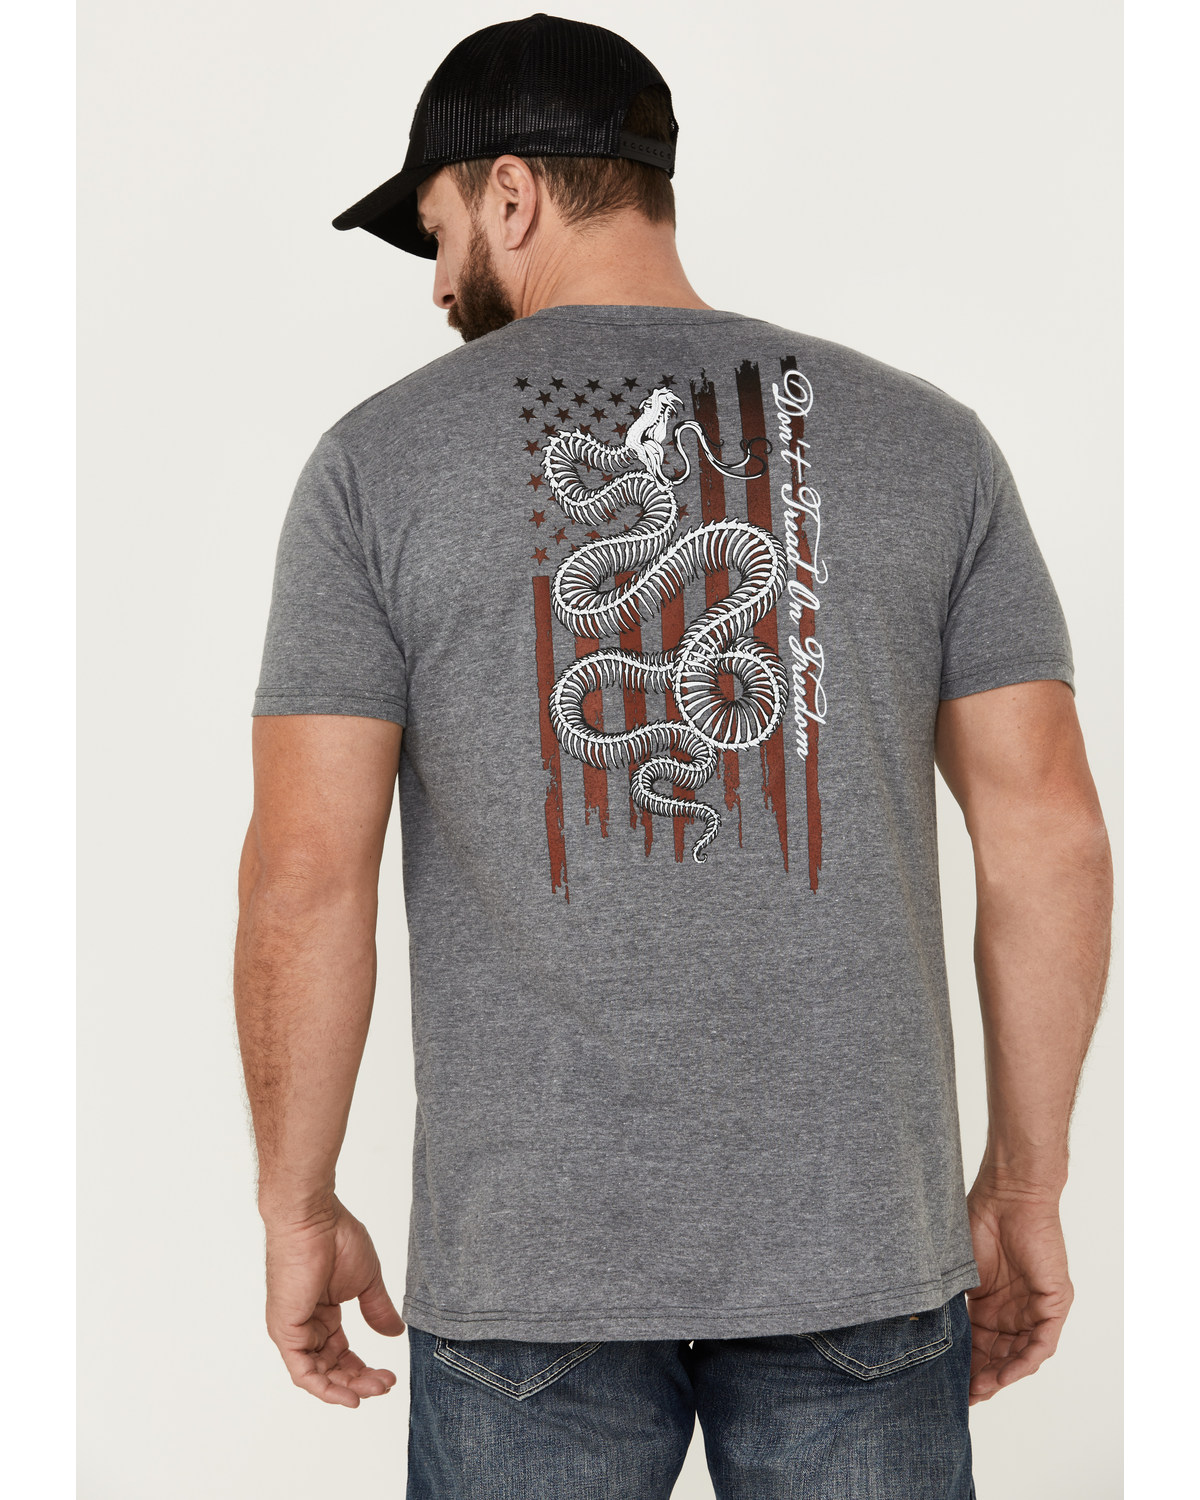 Howitzer Men's Freedom Spine Short Sleeve Graphic T-Shirt